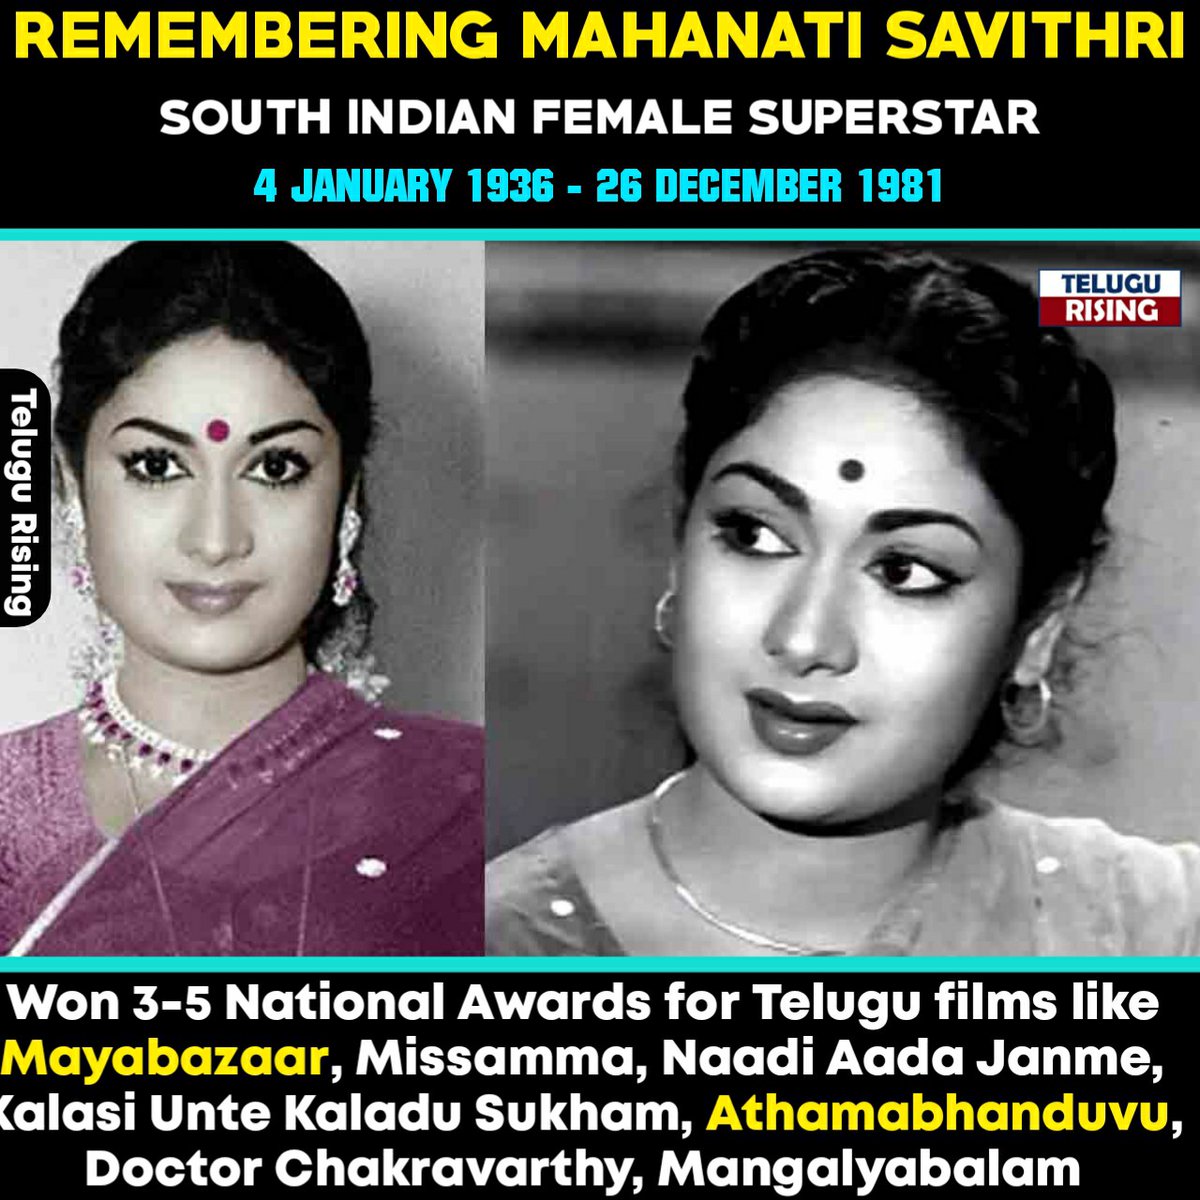 Remembering Mahanati Savithri Garu , South Indian Female Super Star 

#MahanatiSavithri #Mahanati #SouthindianFilms